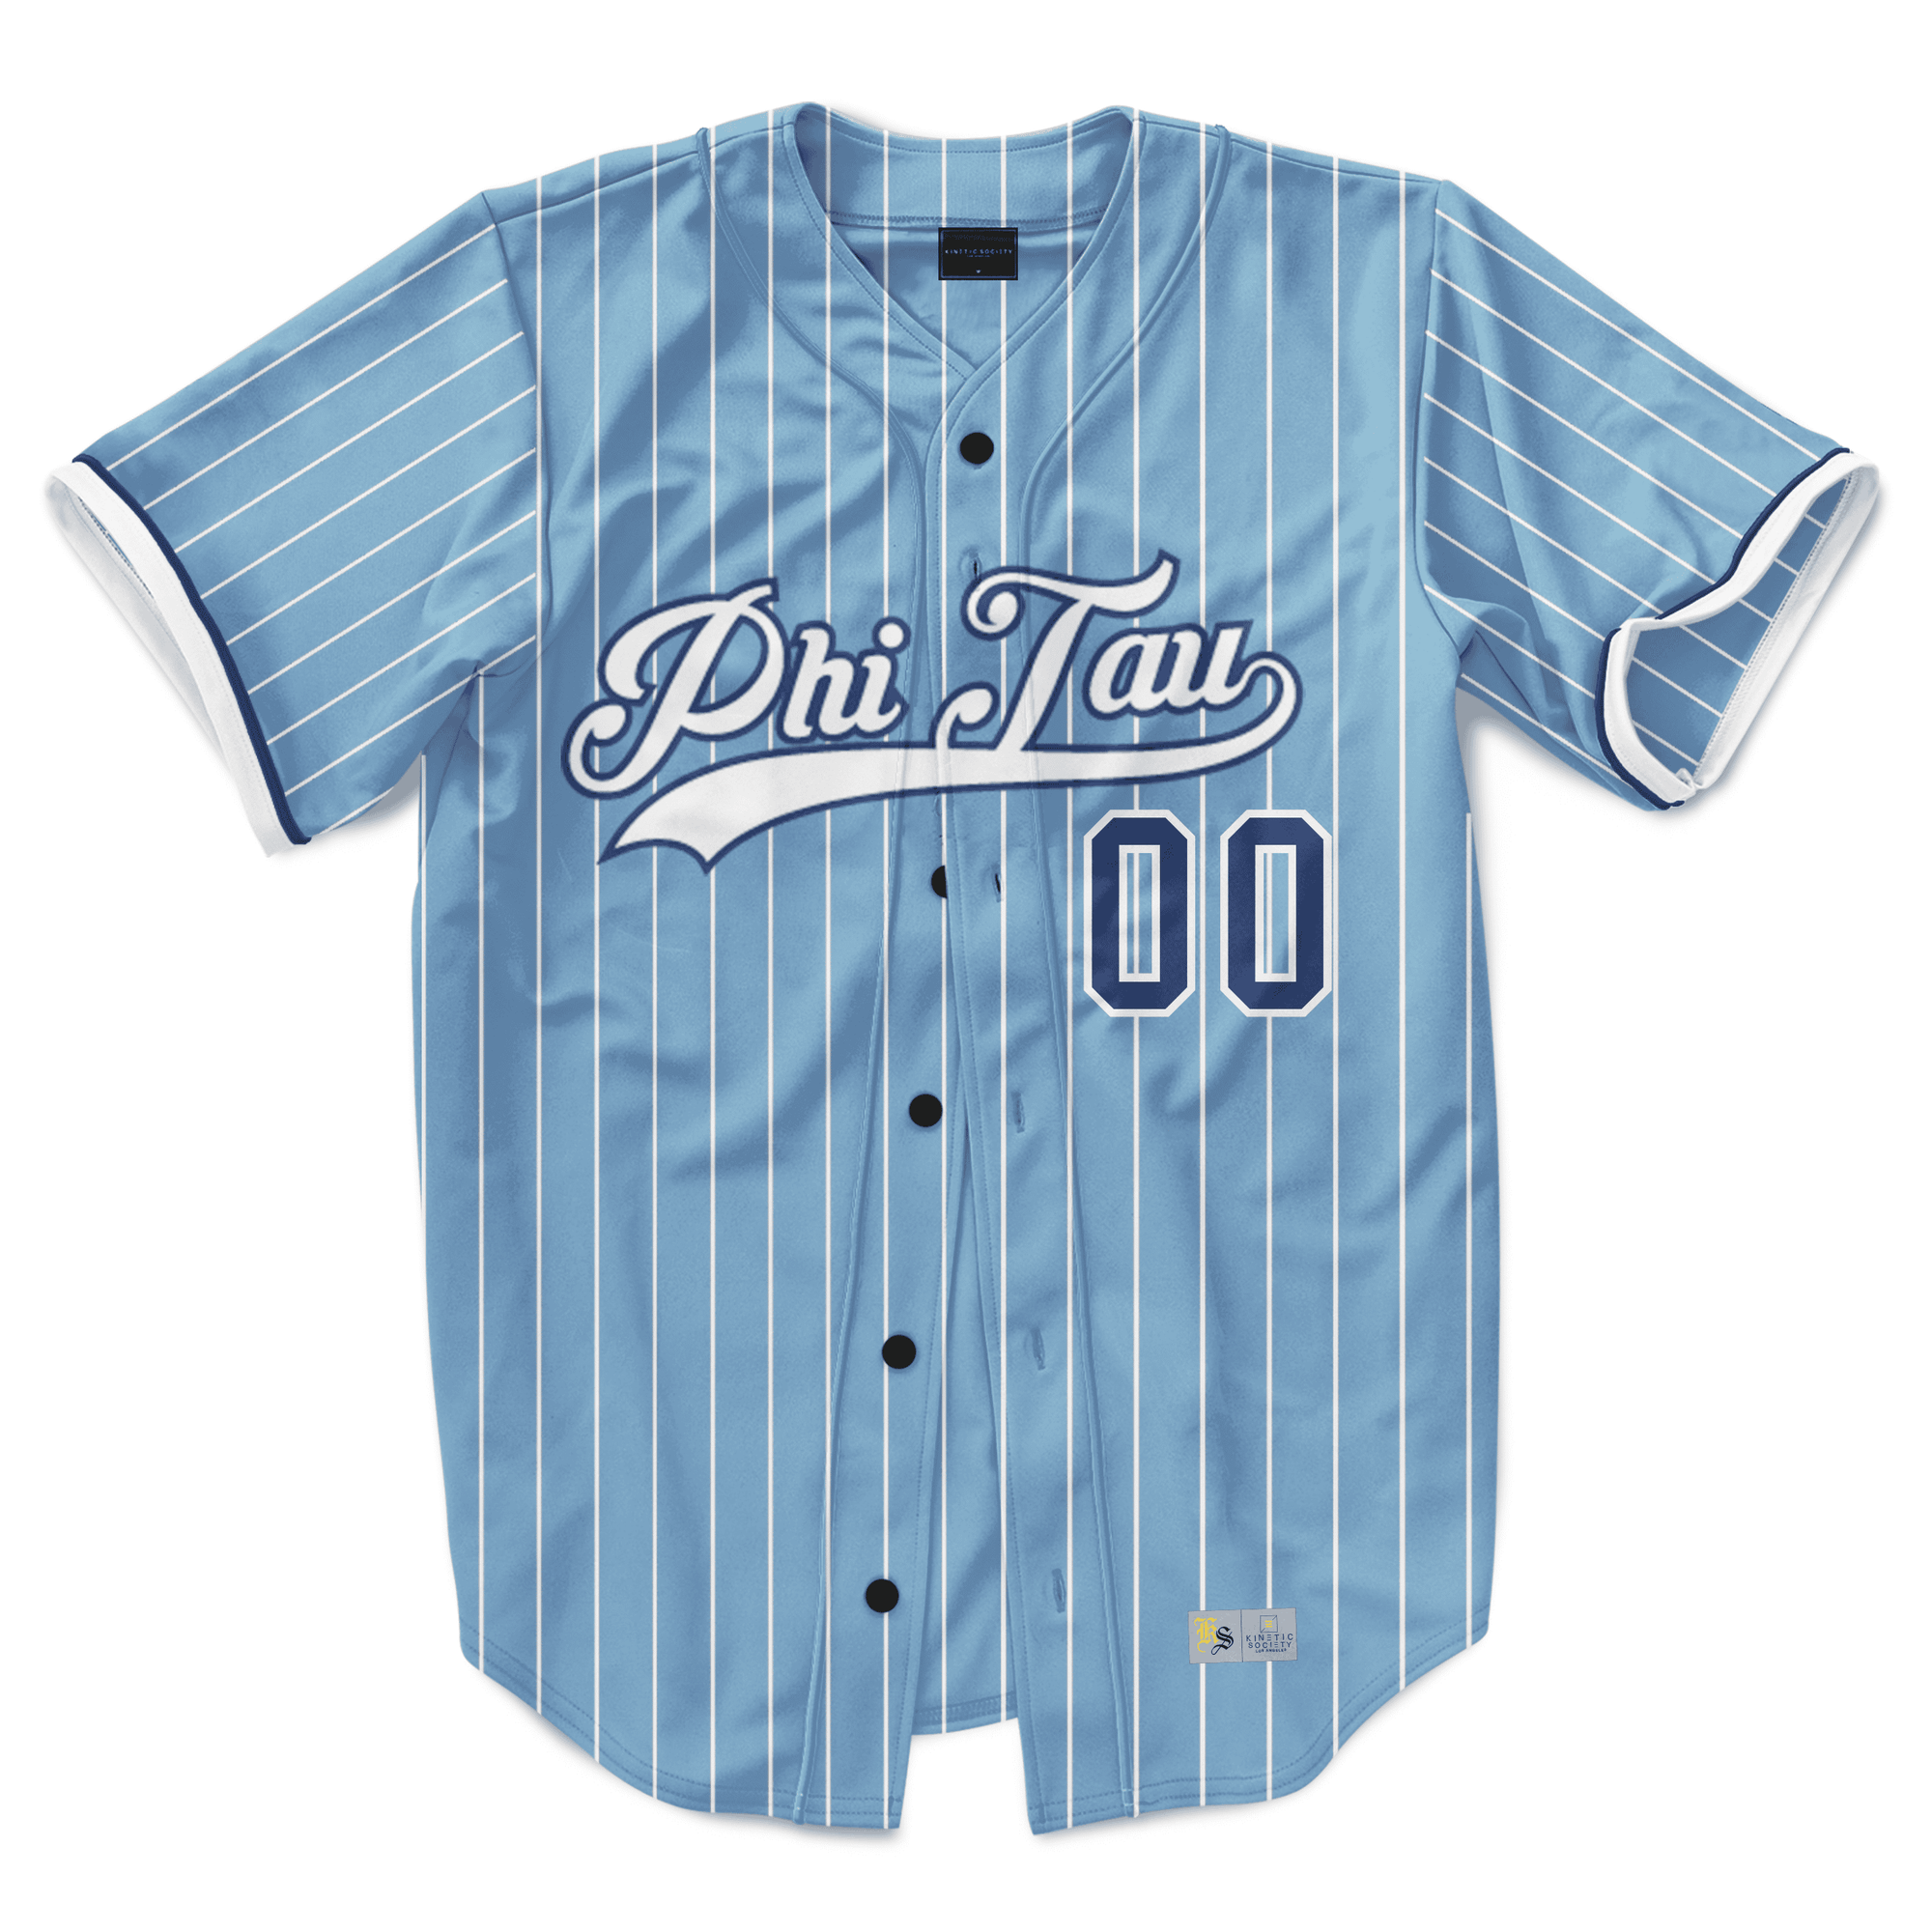 Phi Kappa Tau - Blue Shade Baseball Jersey